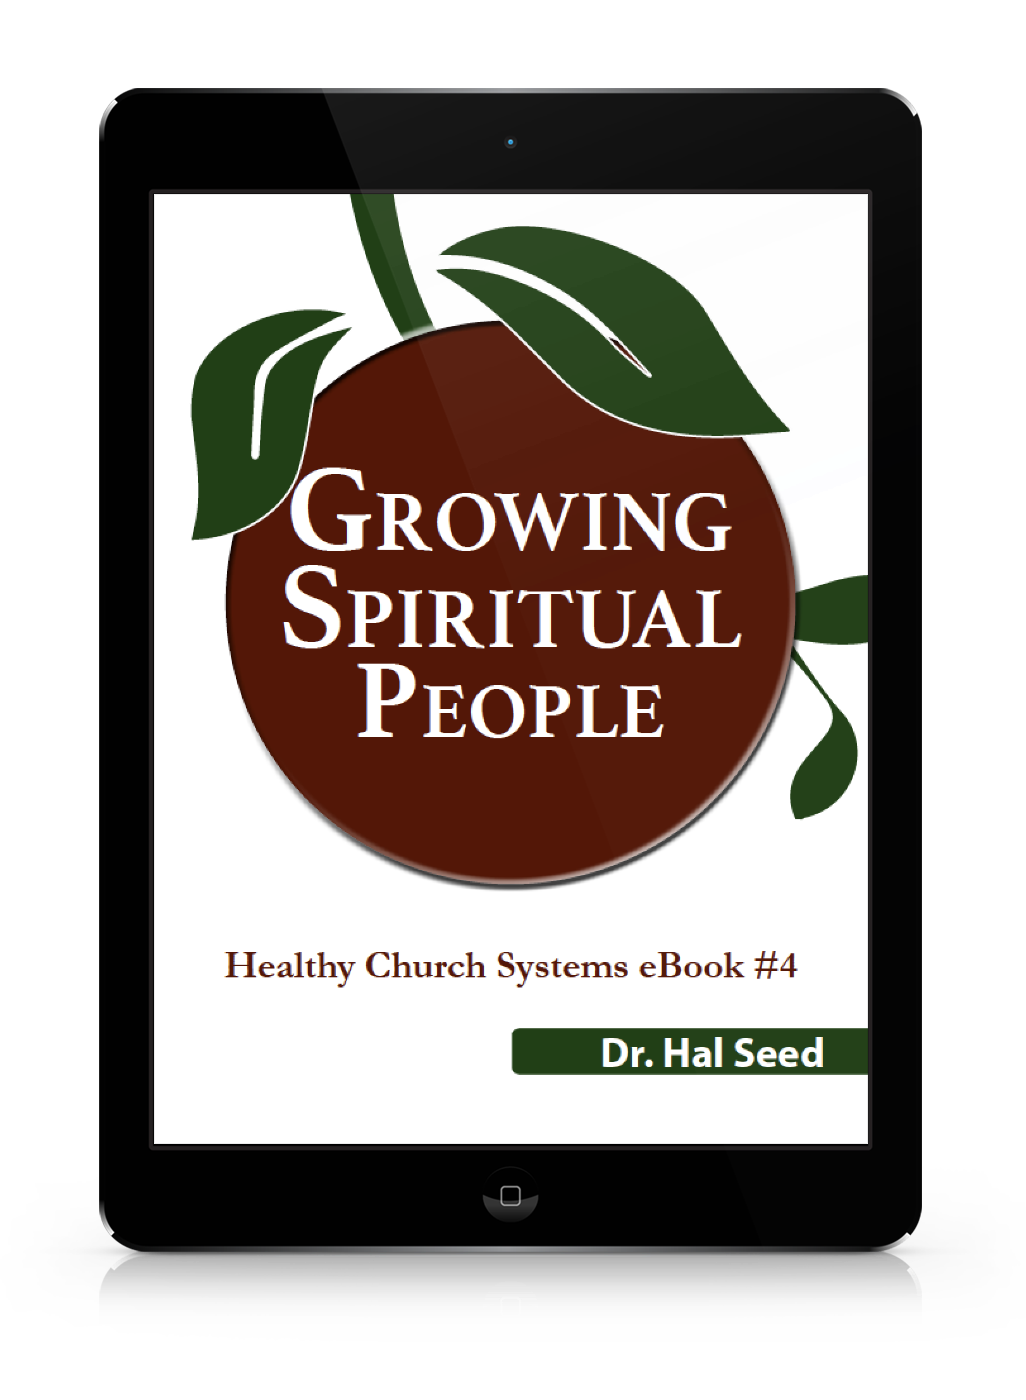 Ebook #4: Growing Spiritual People